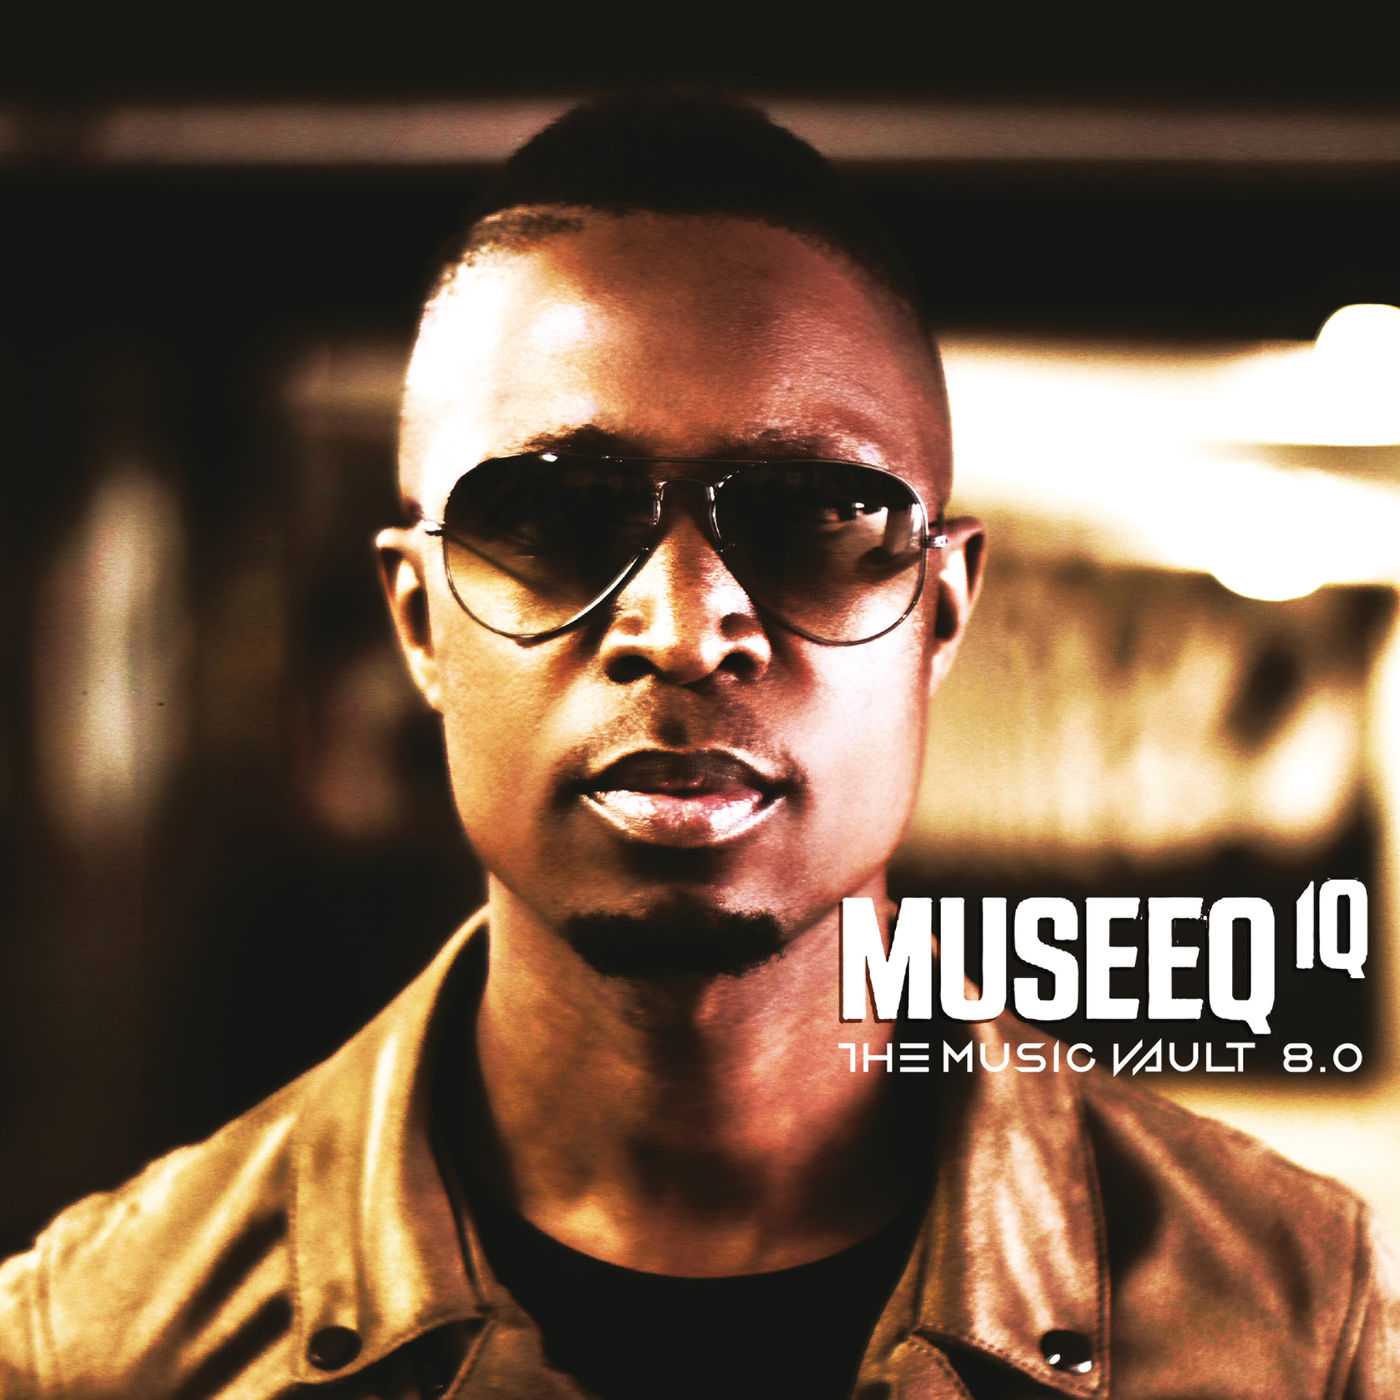 Museeq IQ - The Music Vault 8.0 / Universal Music (Pty) Ltd SA